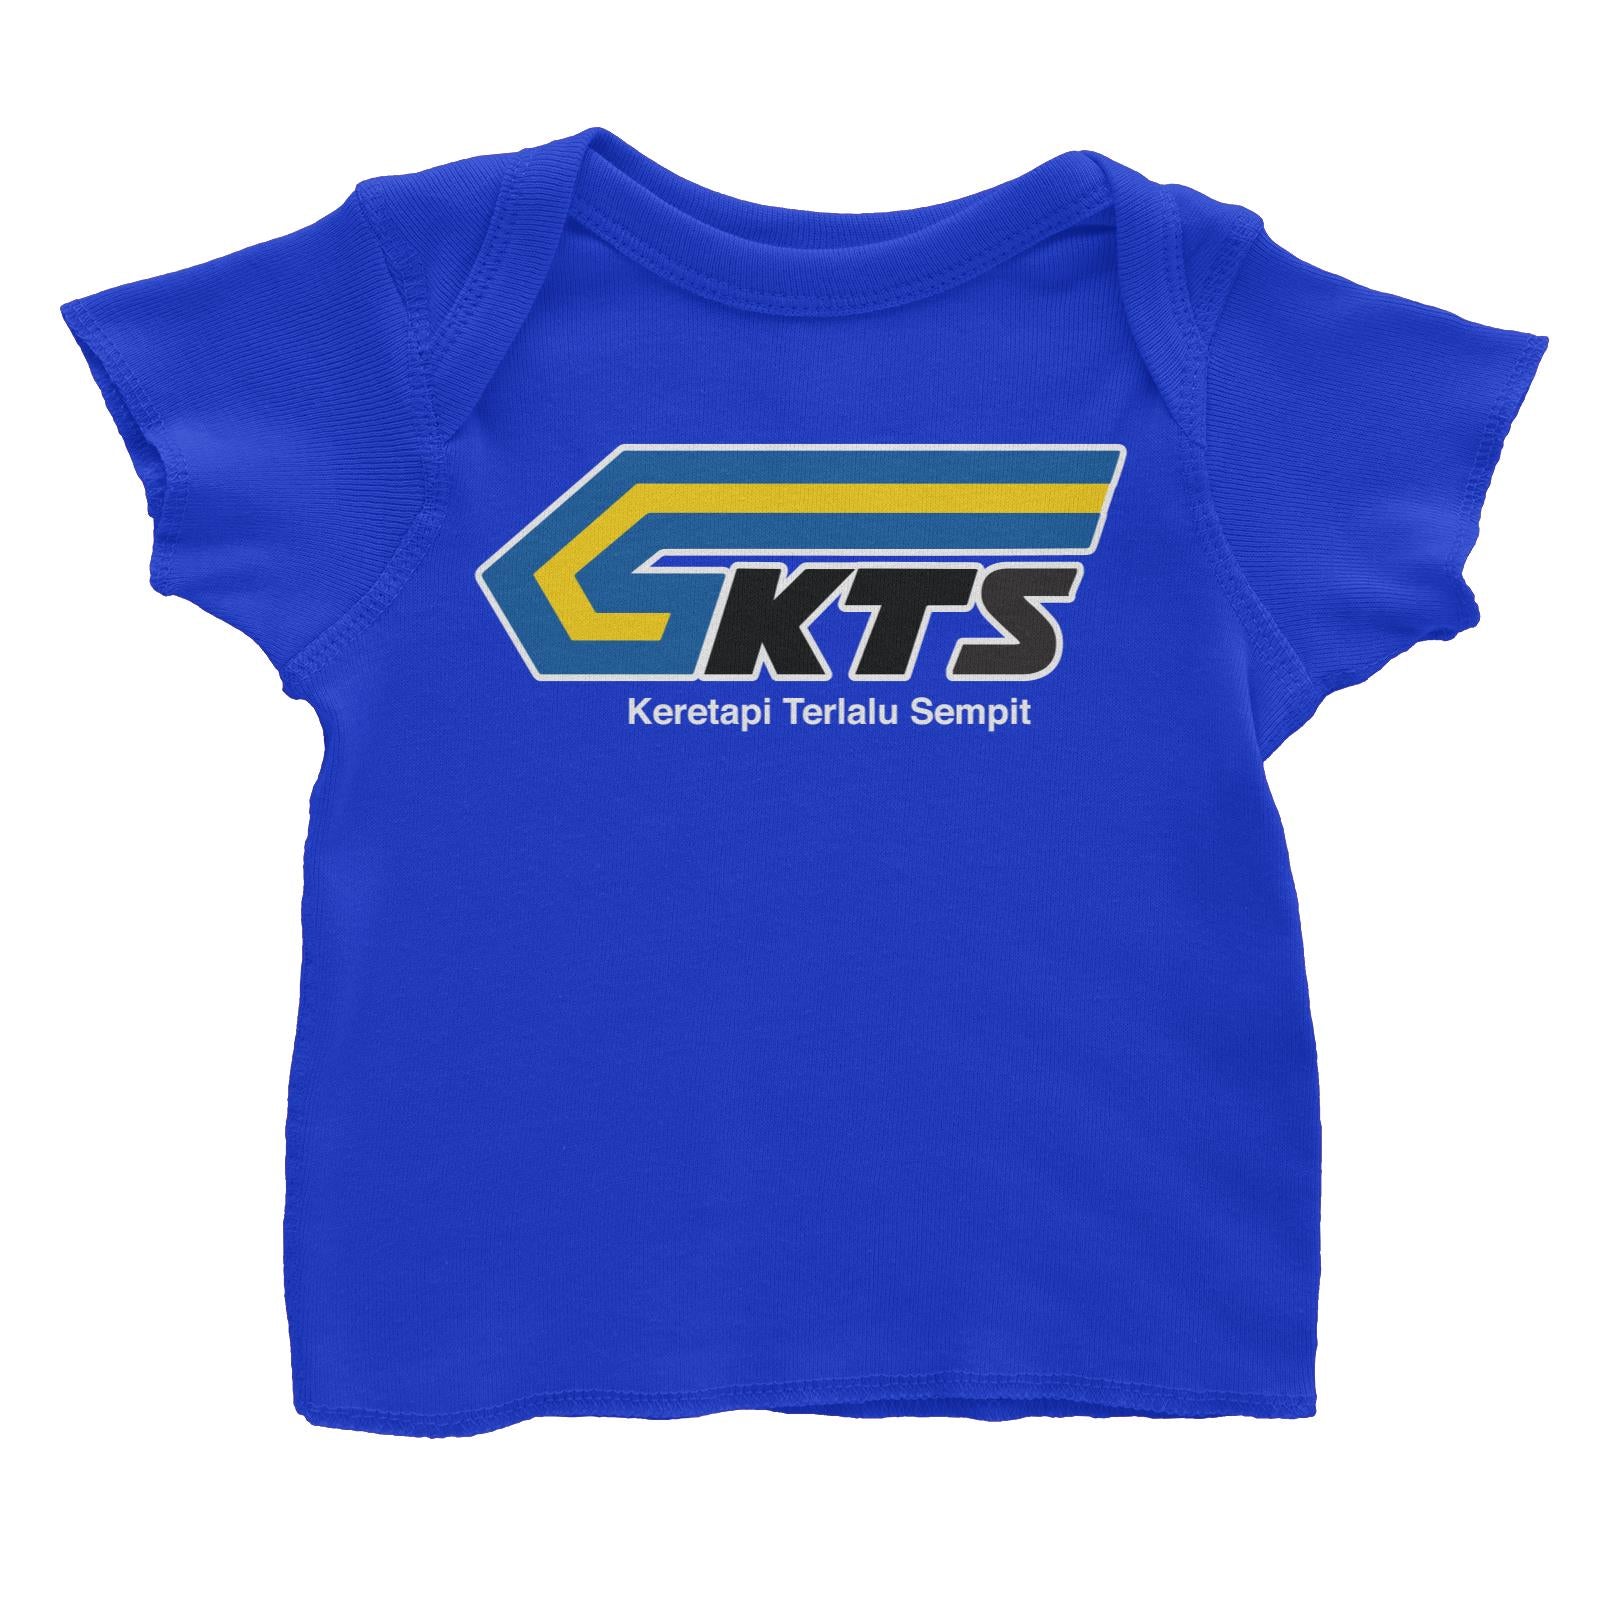 Slang Statement KTS Baby FIt T-Shirt